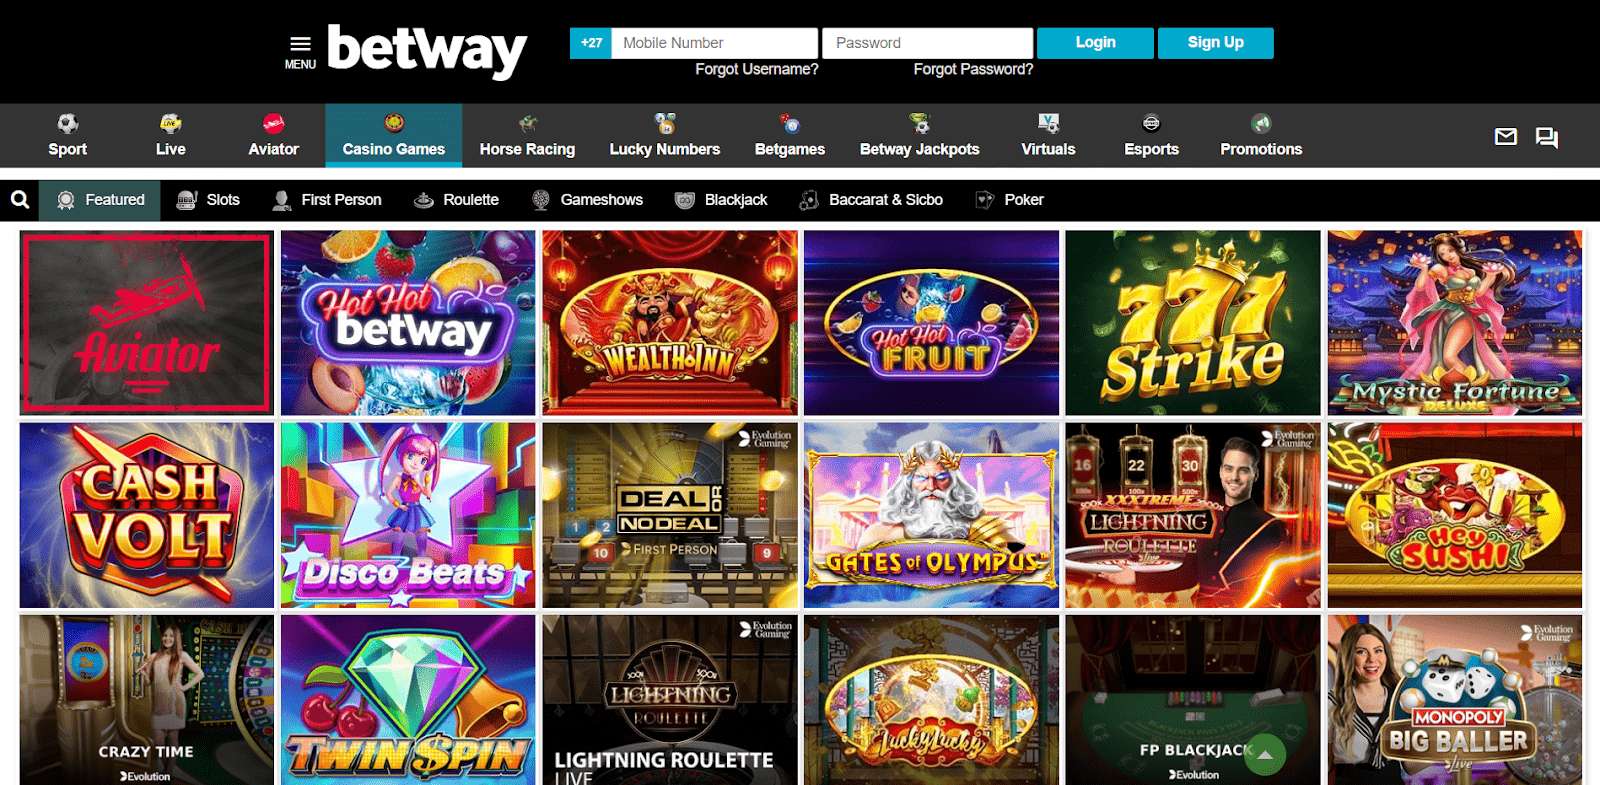 betway casino games page screenshot